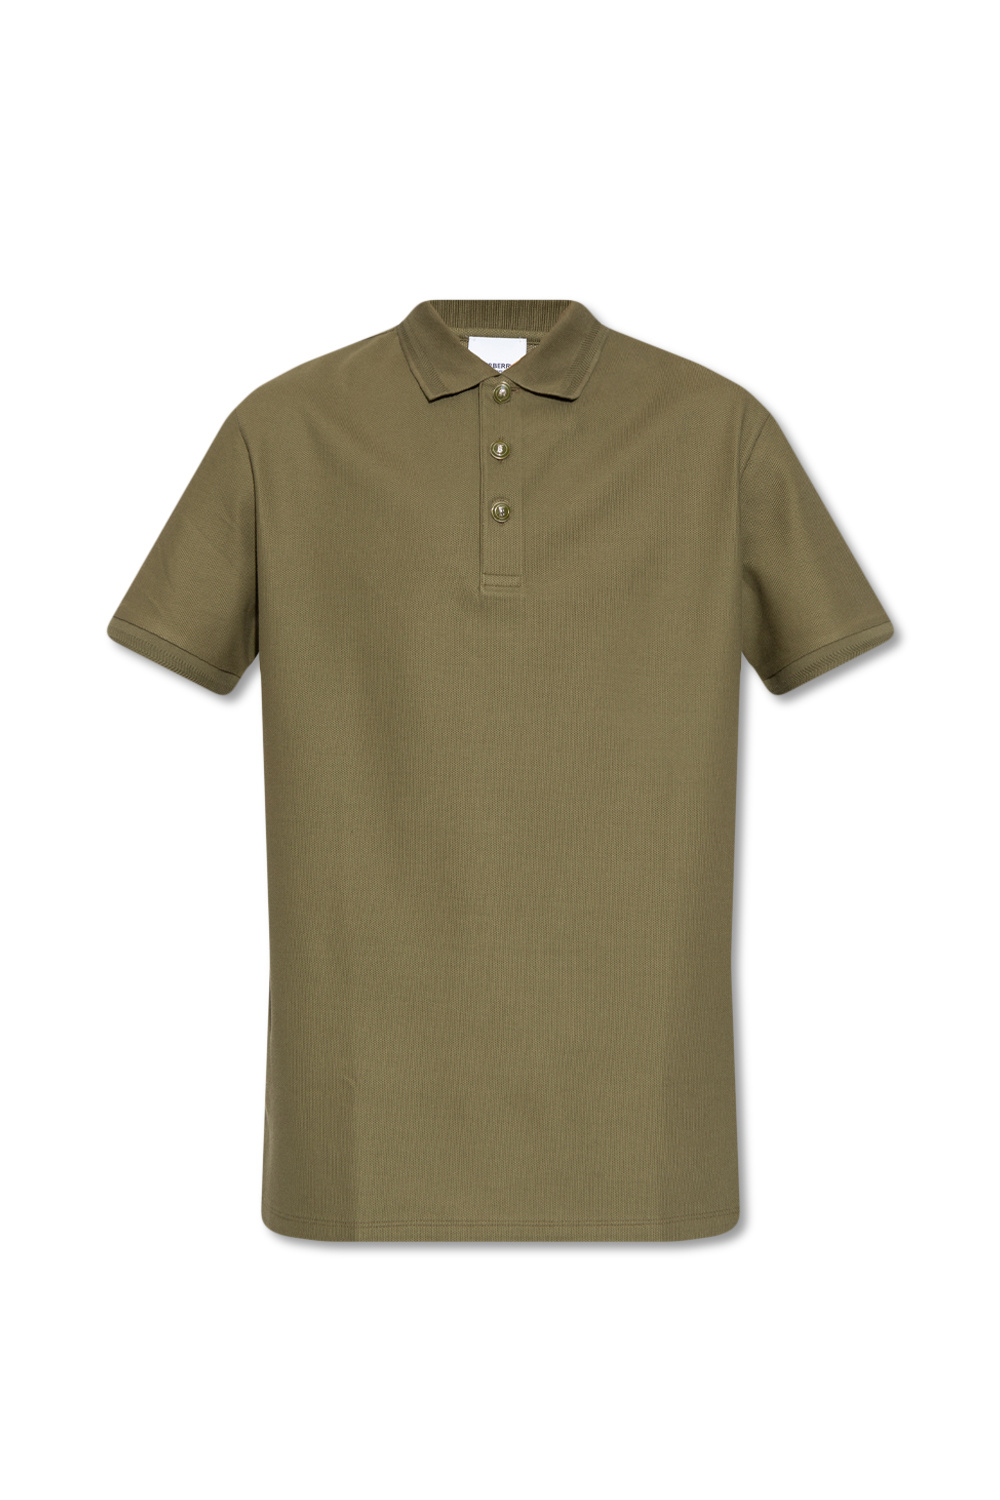 Burberry ‘Goldman’ Ralph polo shirt